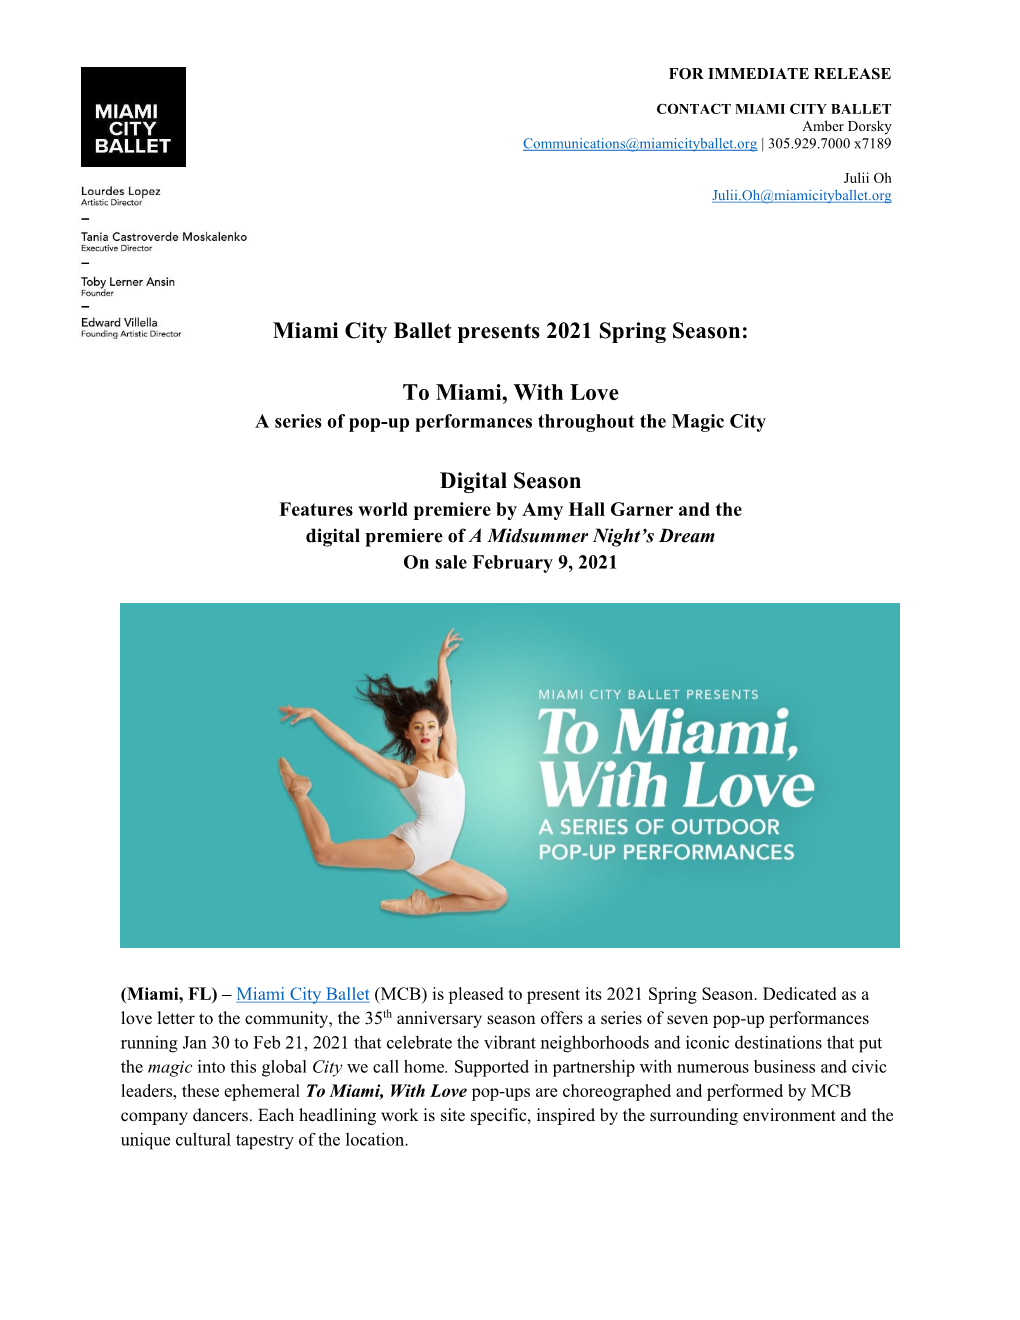 Miami City Ballet Presents 2021 Spring Season